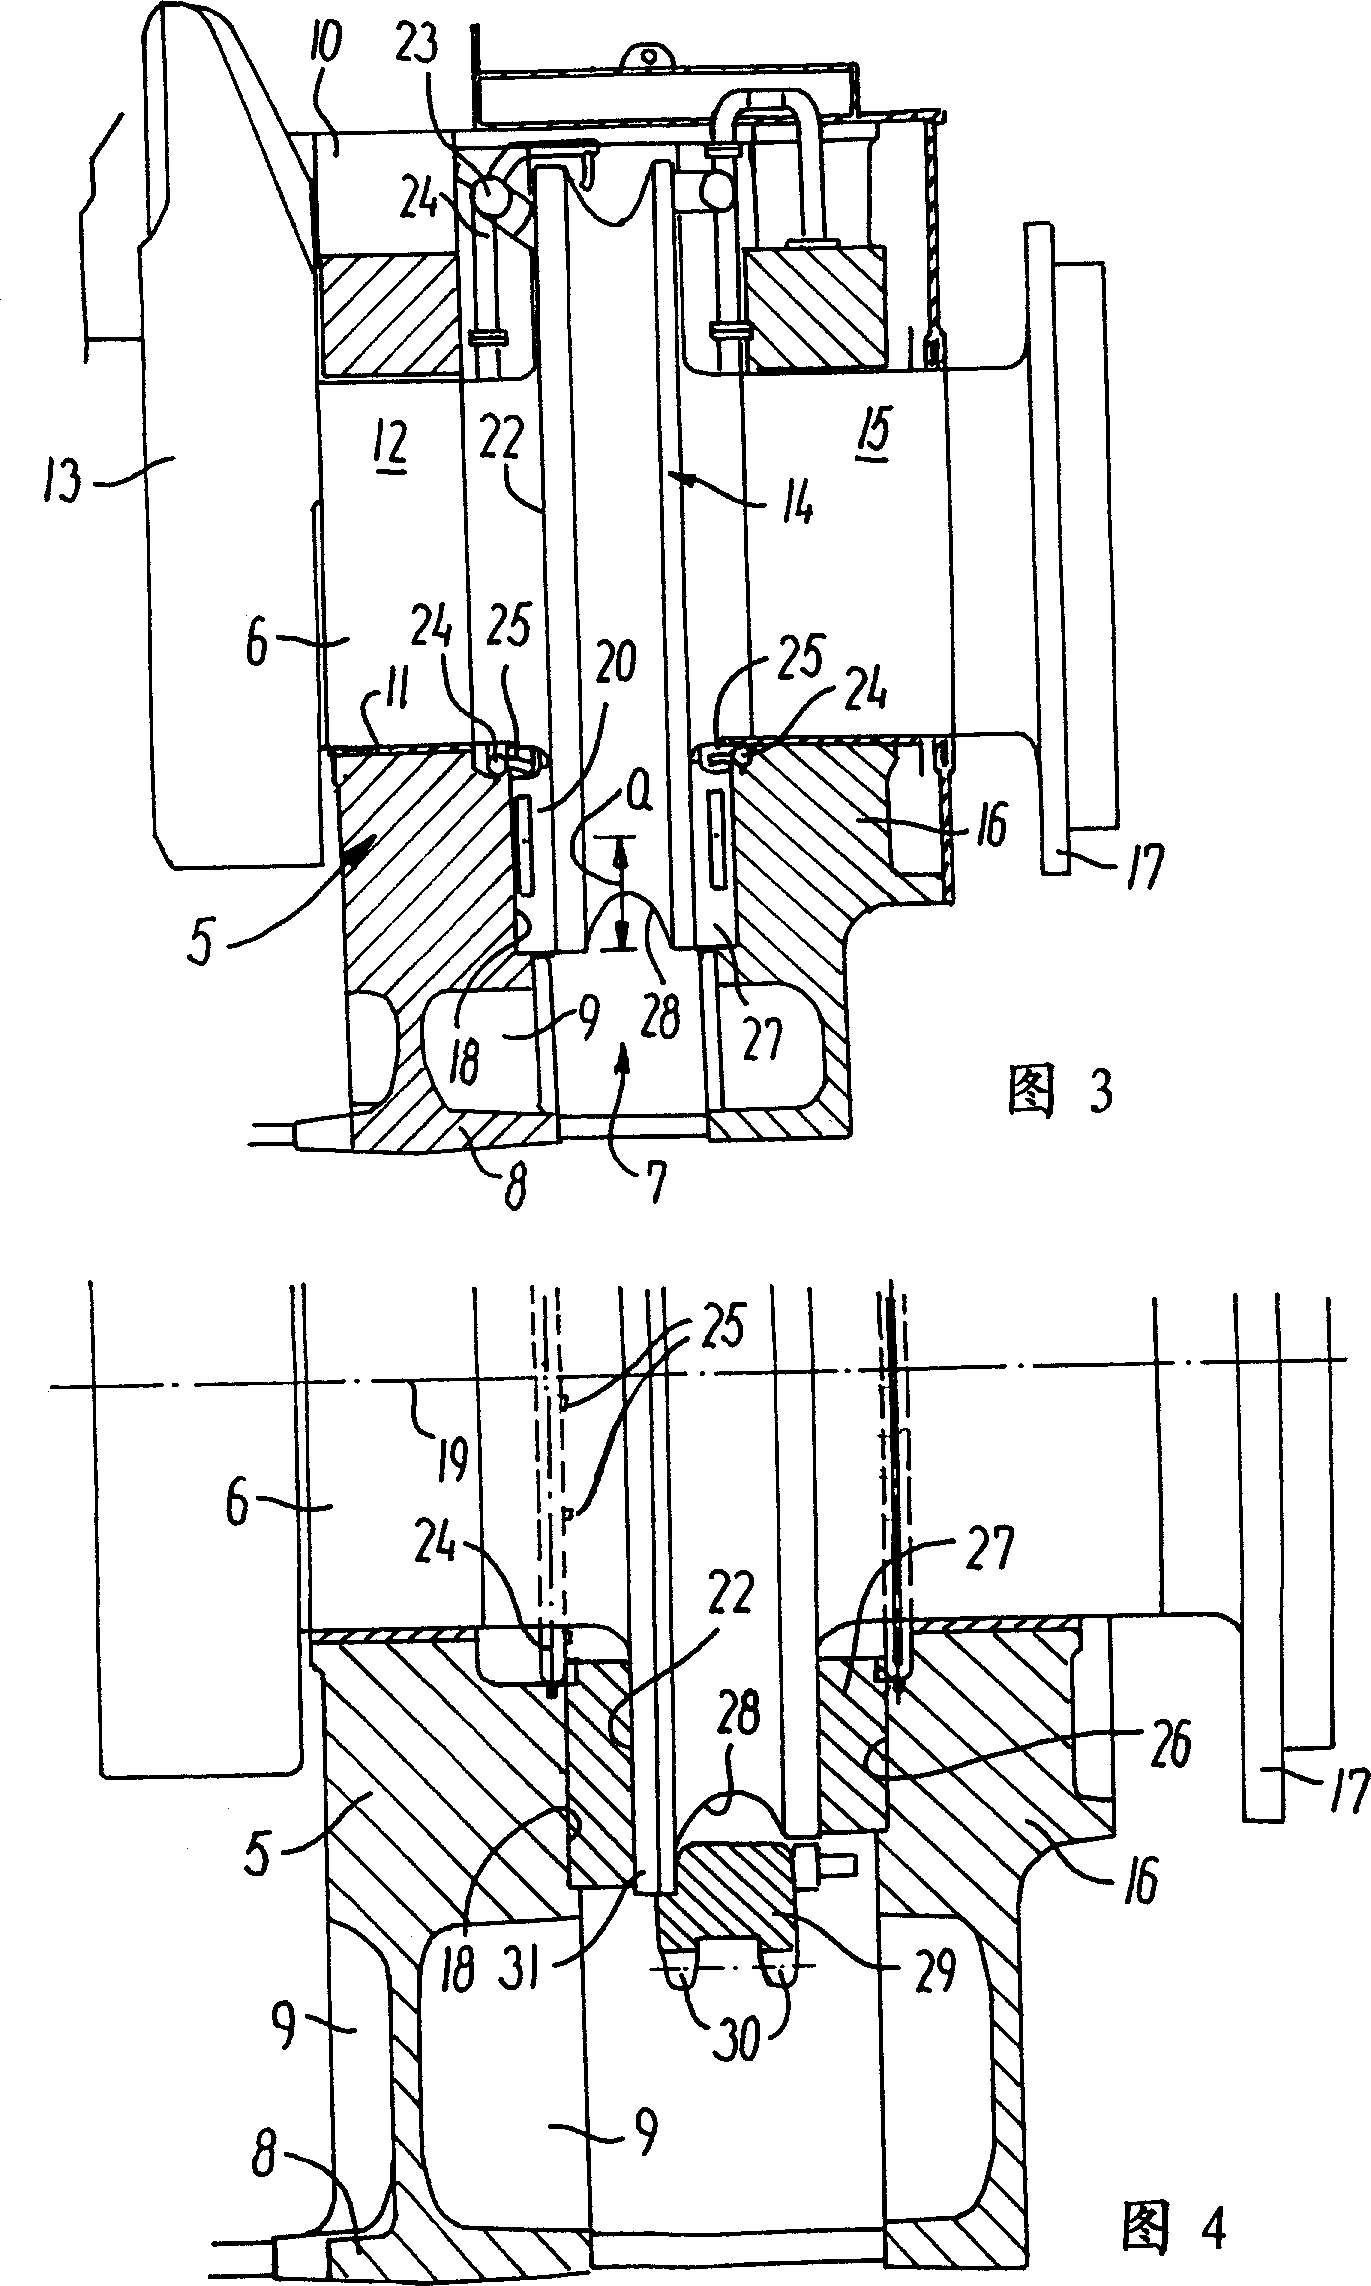 Internal combustion engine for driving propeller shaft